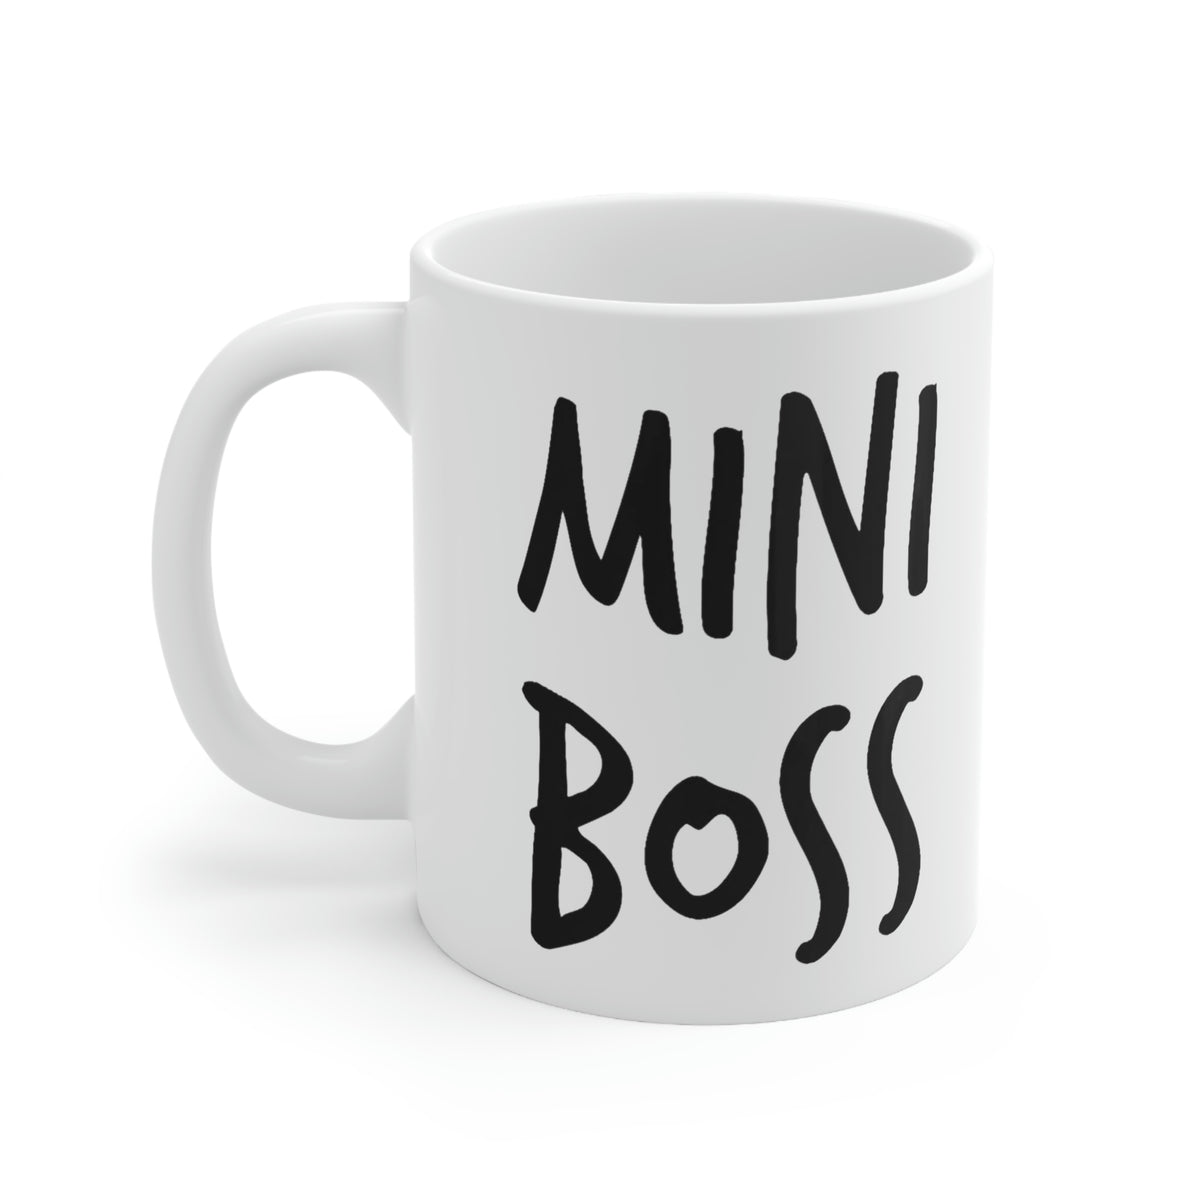 Funny Coffee Mug - Mini Boss Tea Cup For Daughter